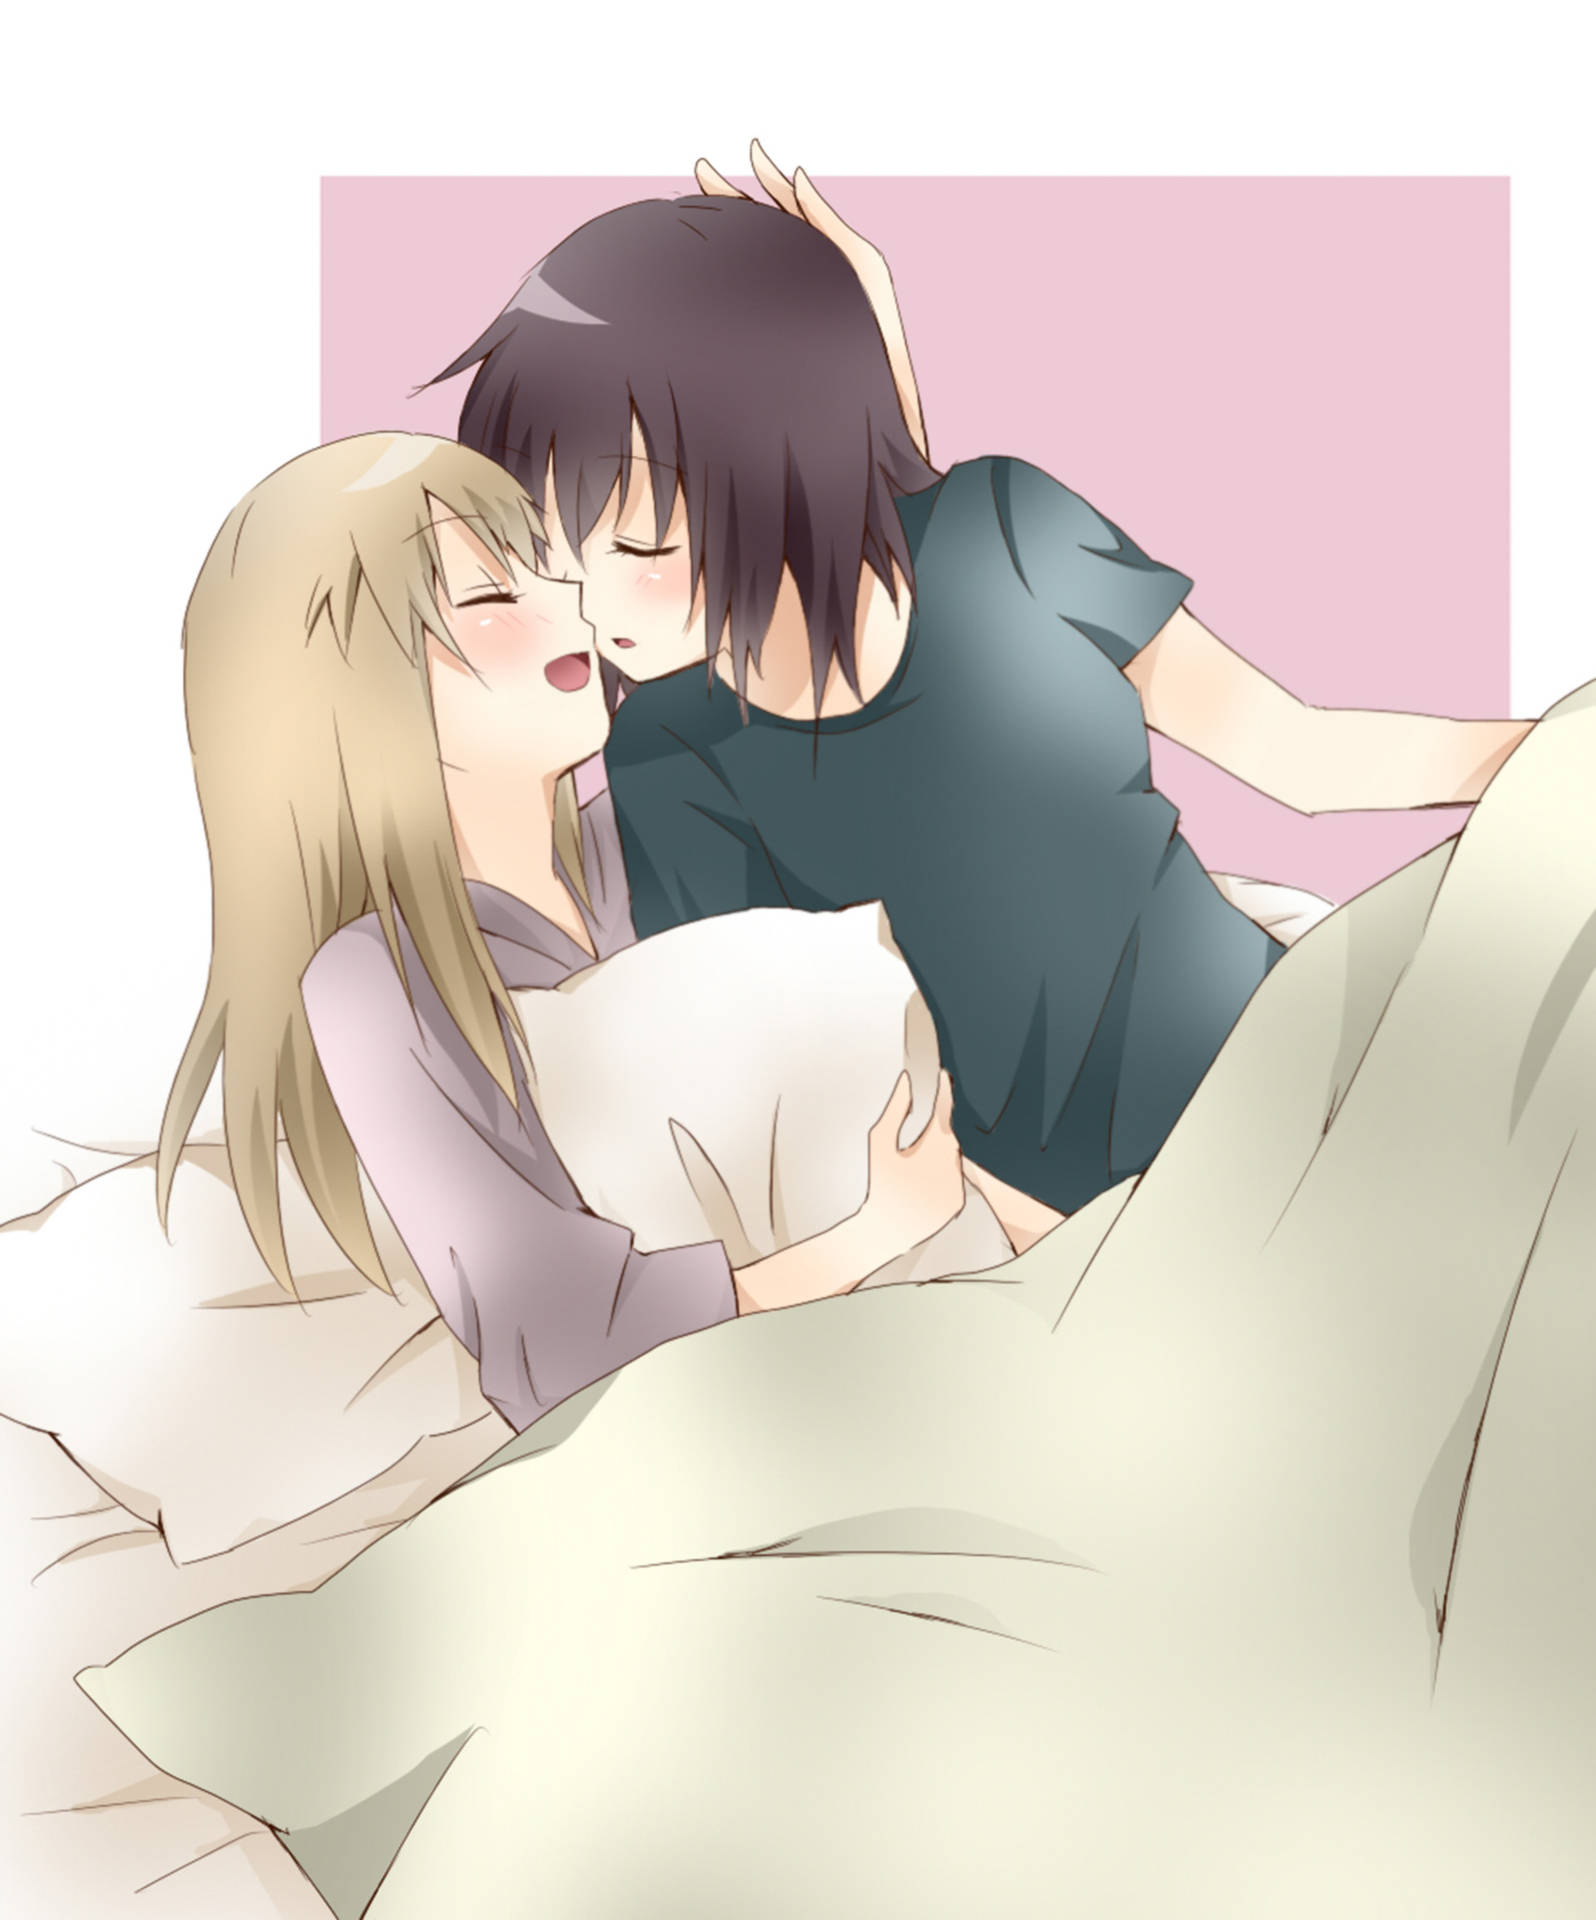 Cuddling Anime Lesbian Background